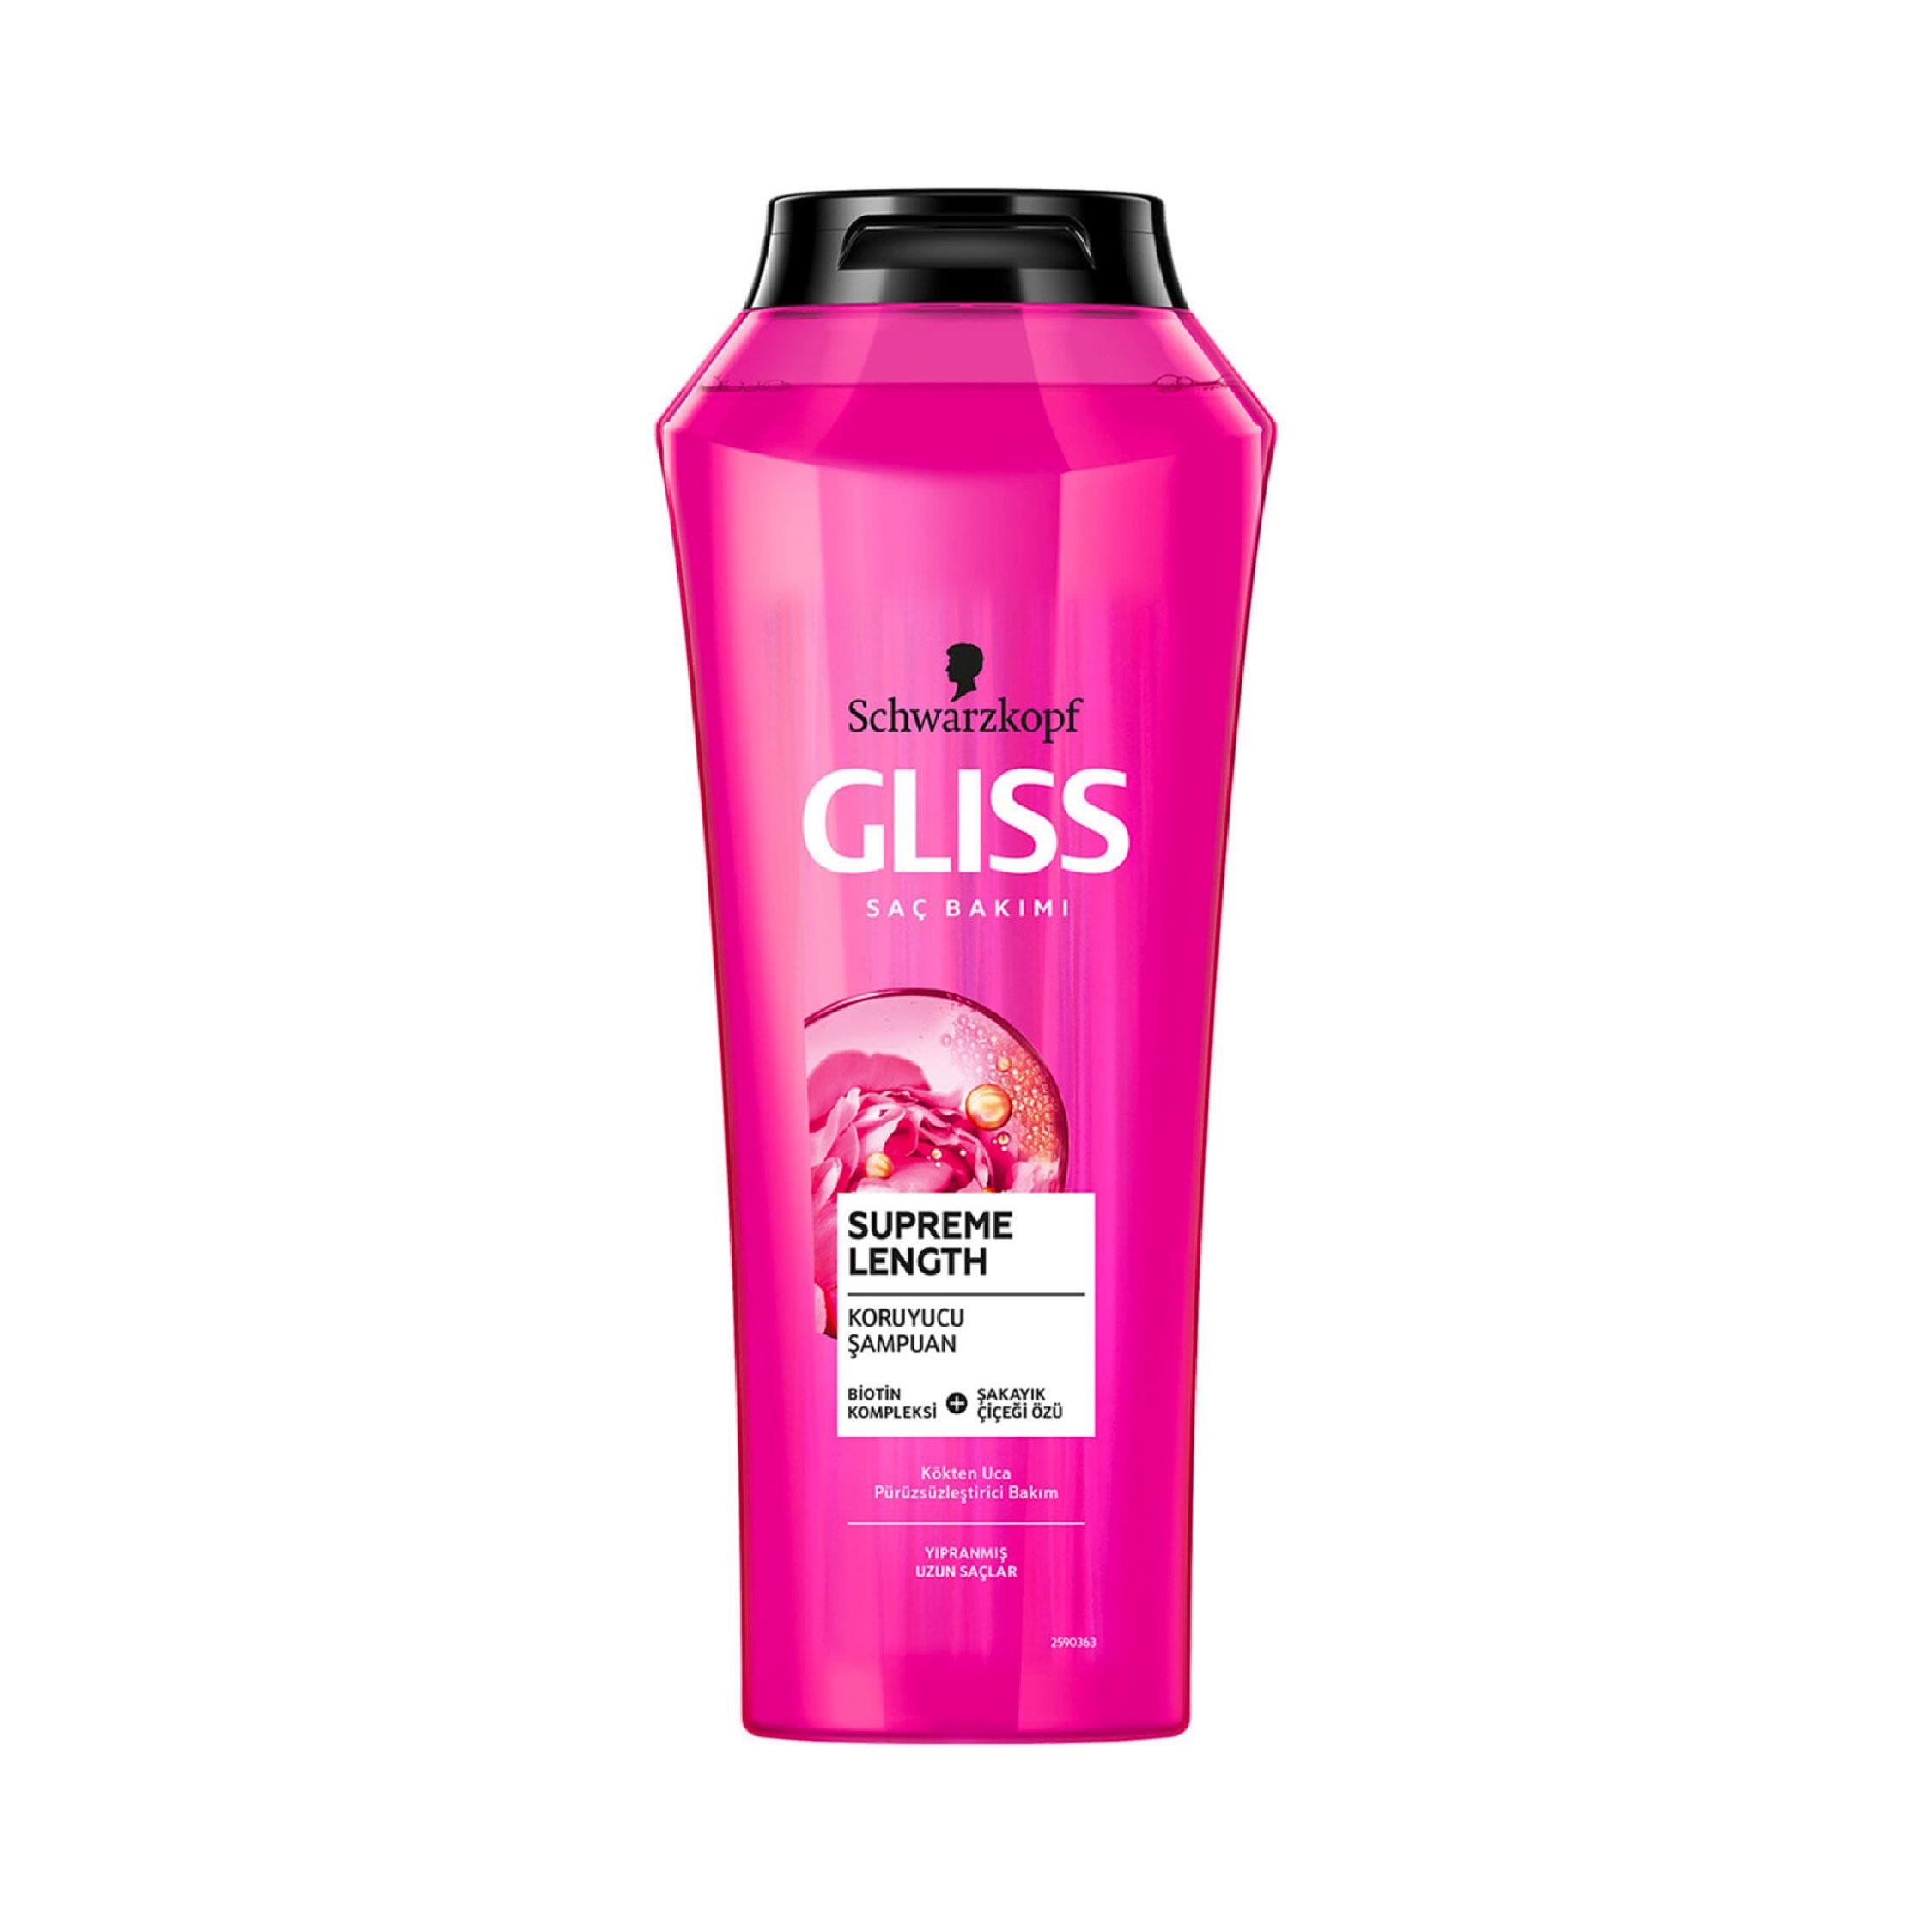 Gliss Supreme Length Şampuan 500 ml